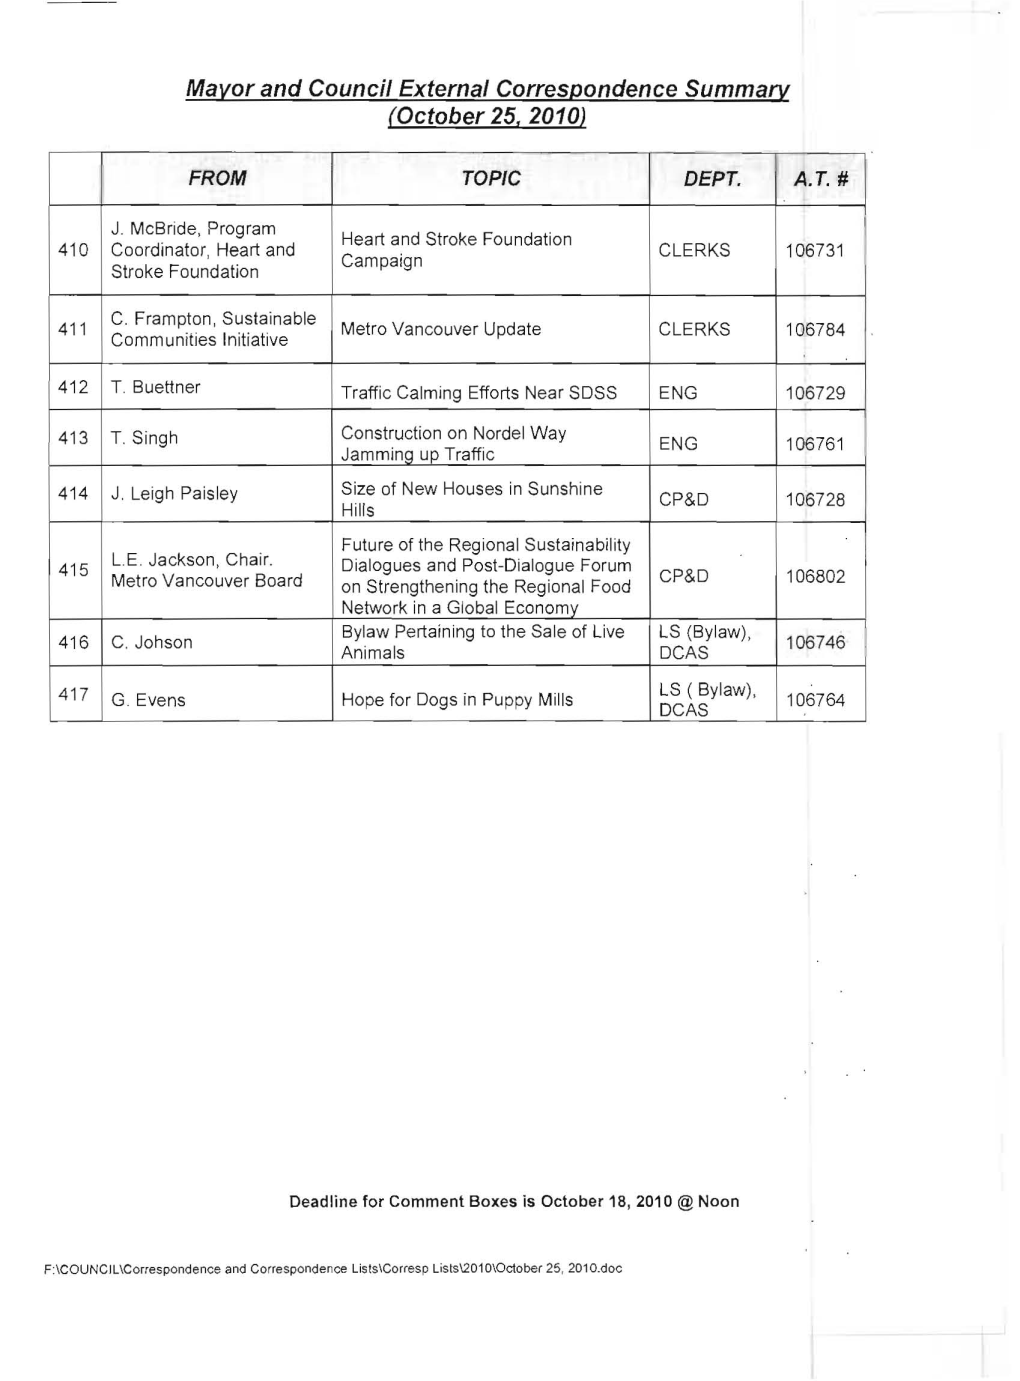 Mayor and Council External Correspondence Summary (October 25, 2010)